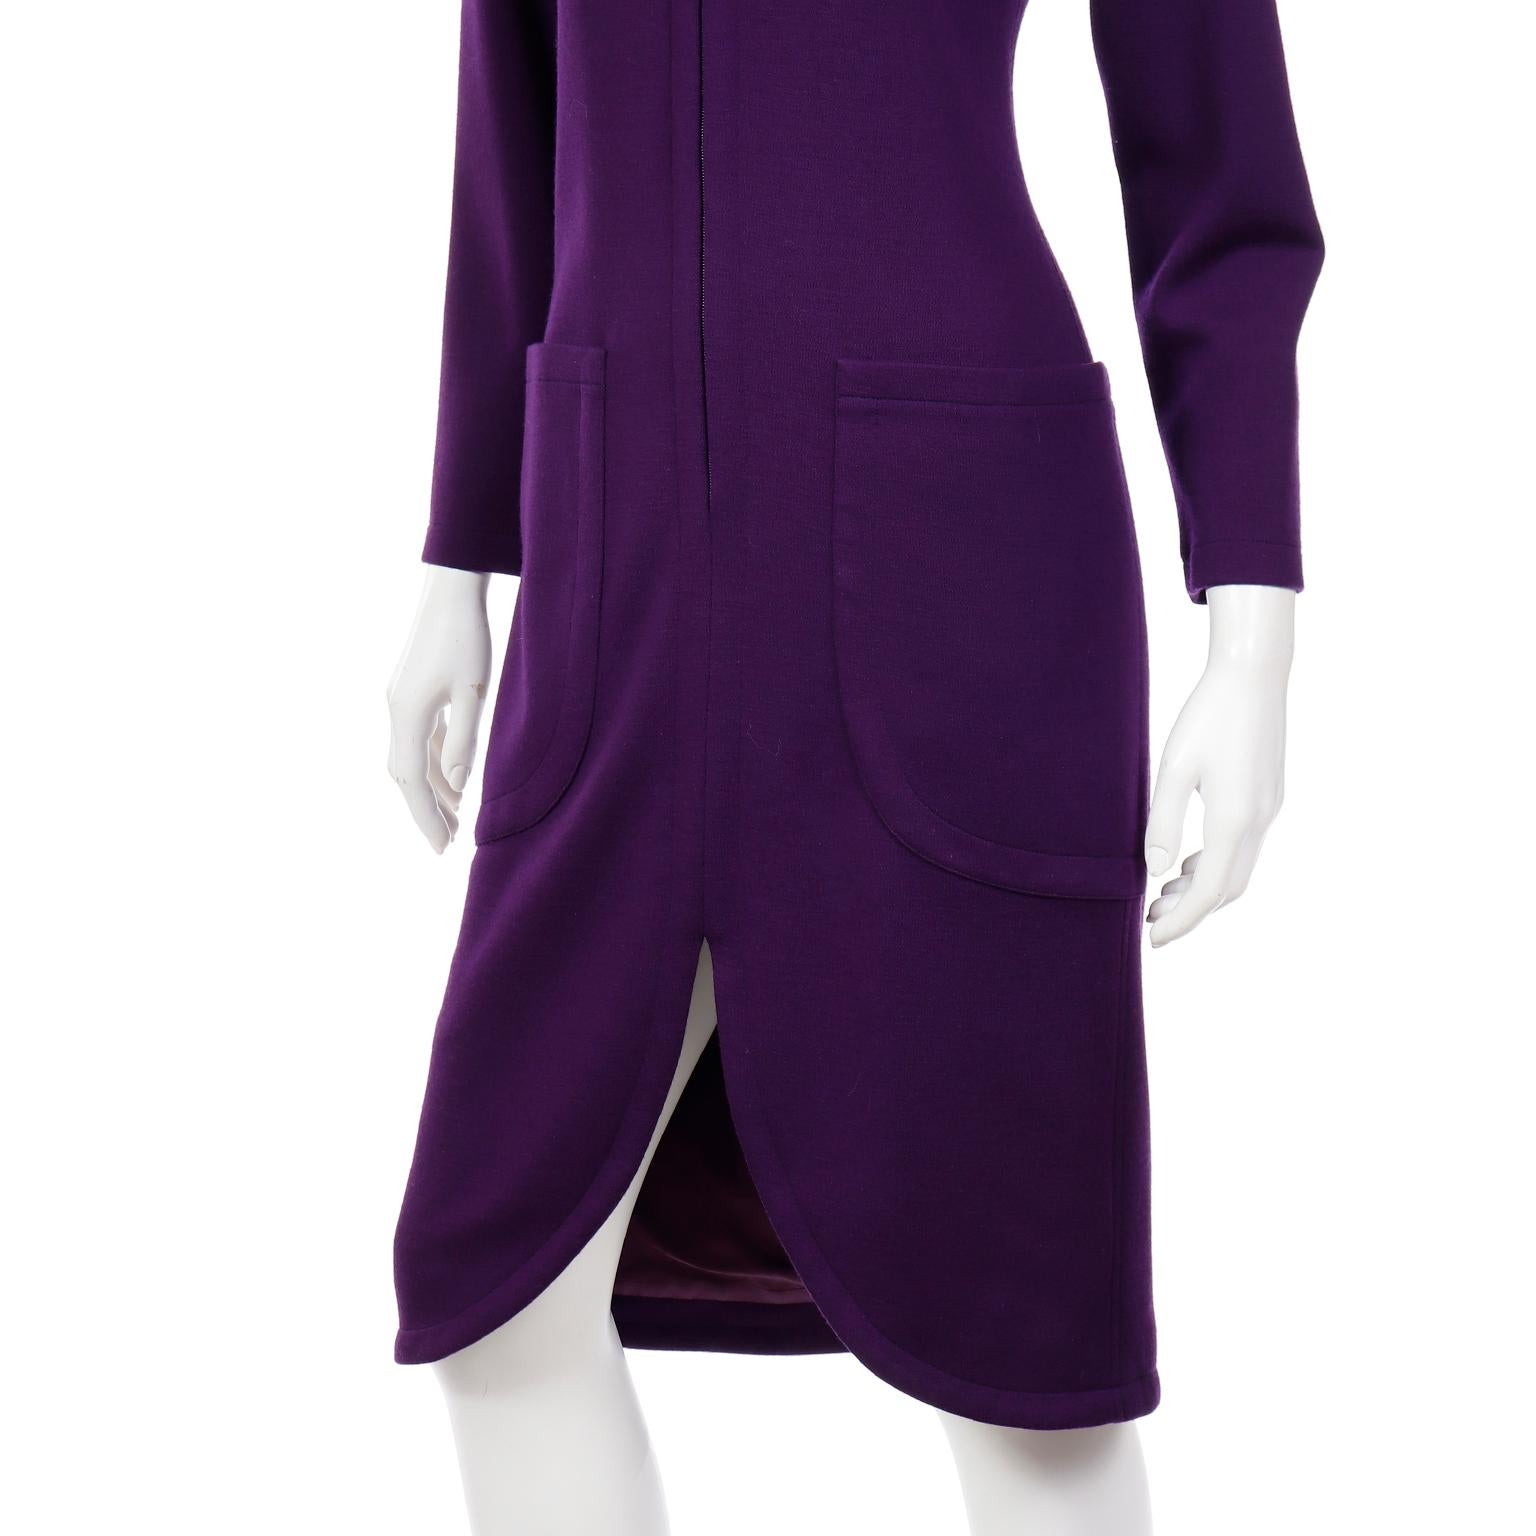 1984 Yves Saint Laurent Vintage Purple Zip Front Runway Dress For Sale 3